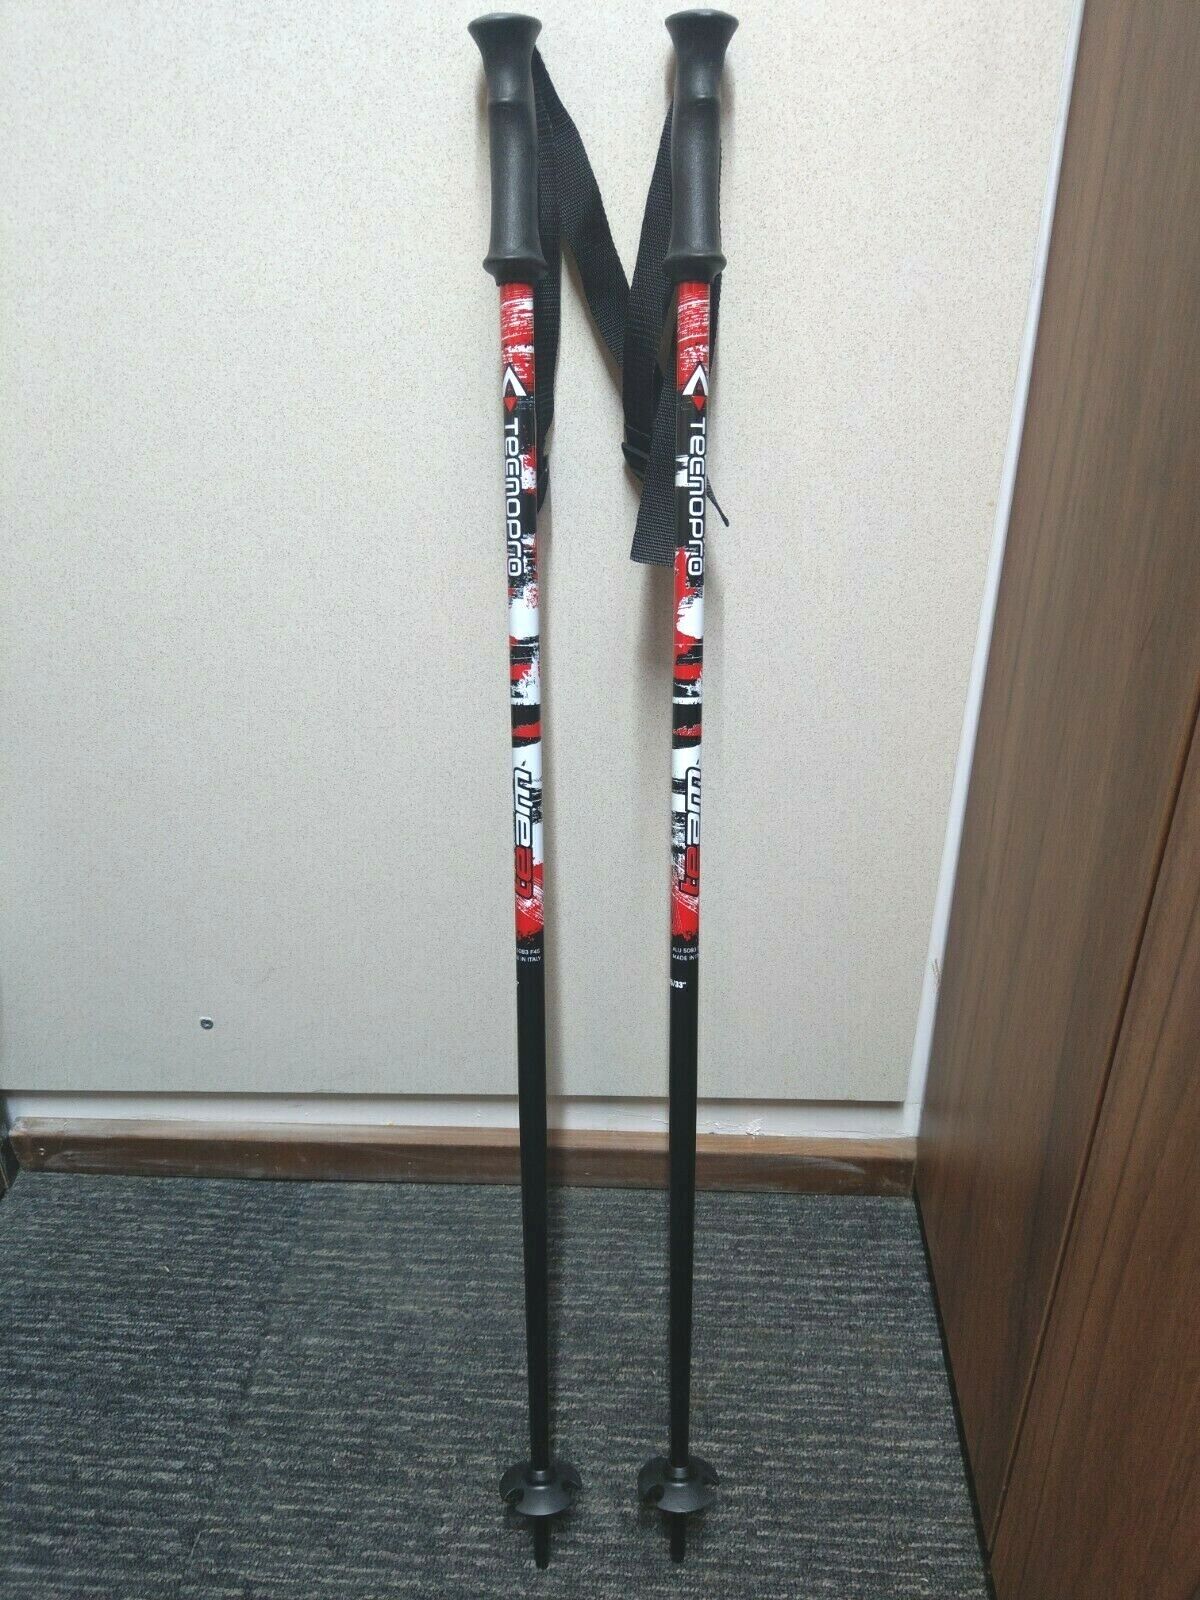 BRAND NEW Kid Ski Max 47% OFF Poles Tecnopro Snow Translated 85 Winter Outdoor cm Fun